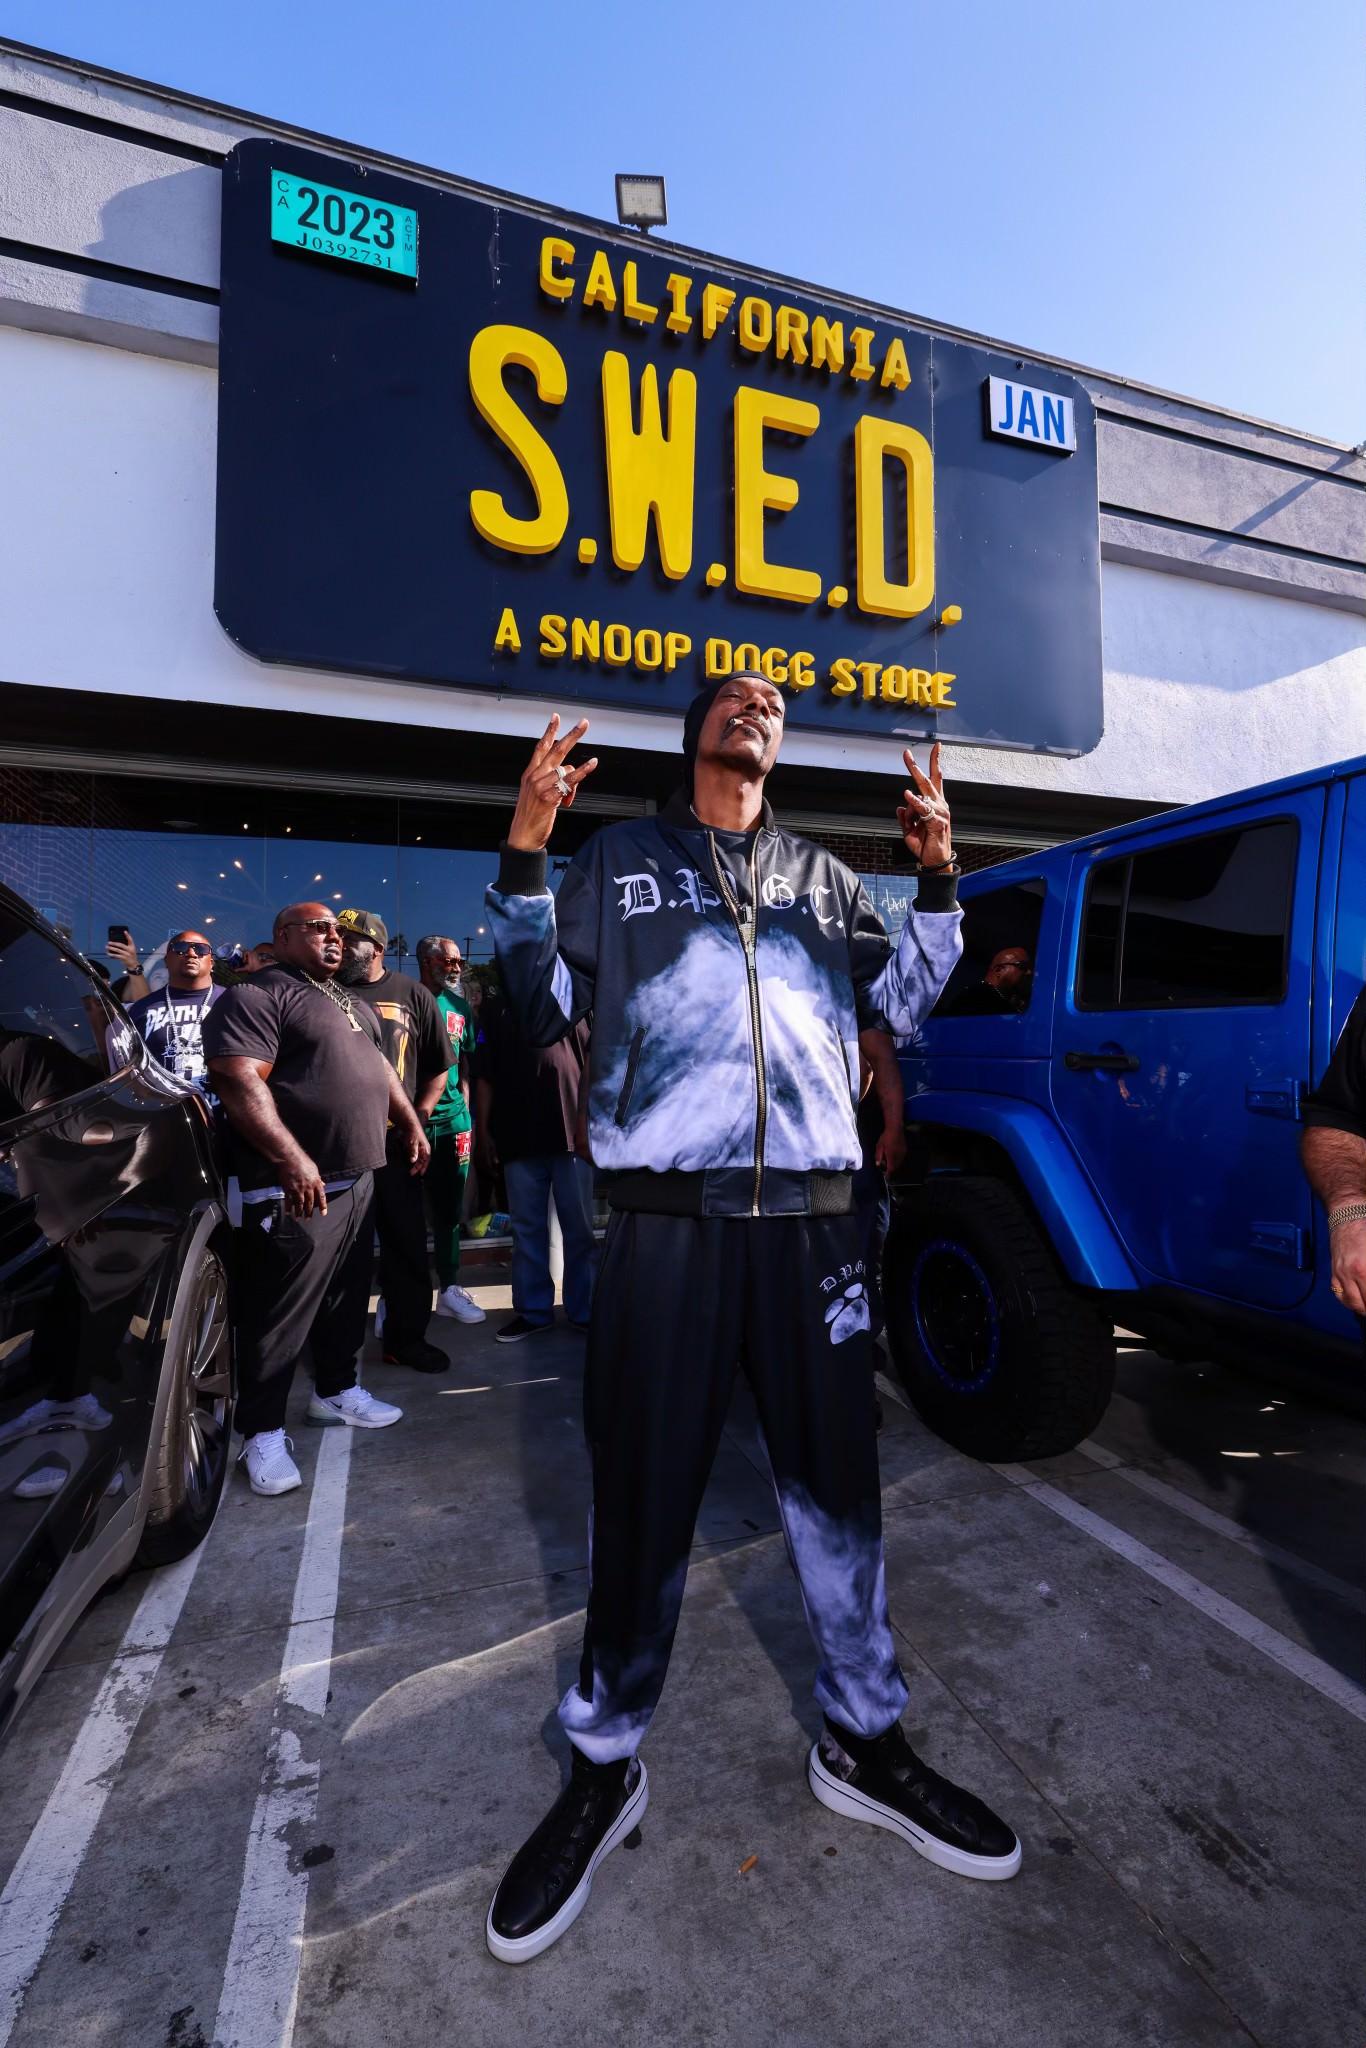 Snoop Dogg at S.W.E.D.